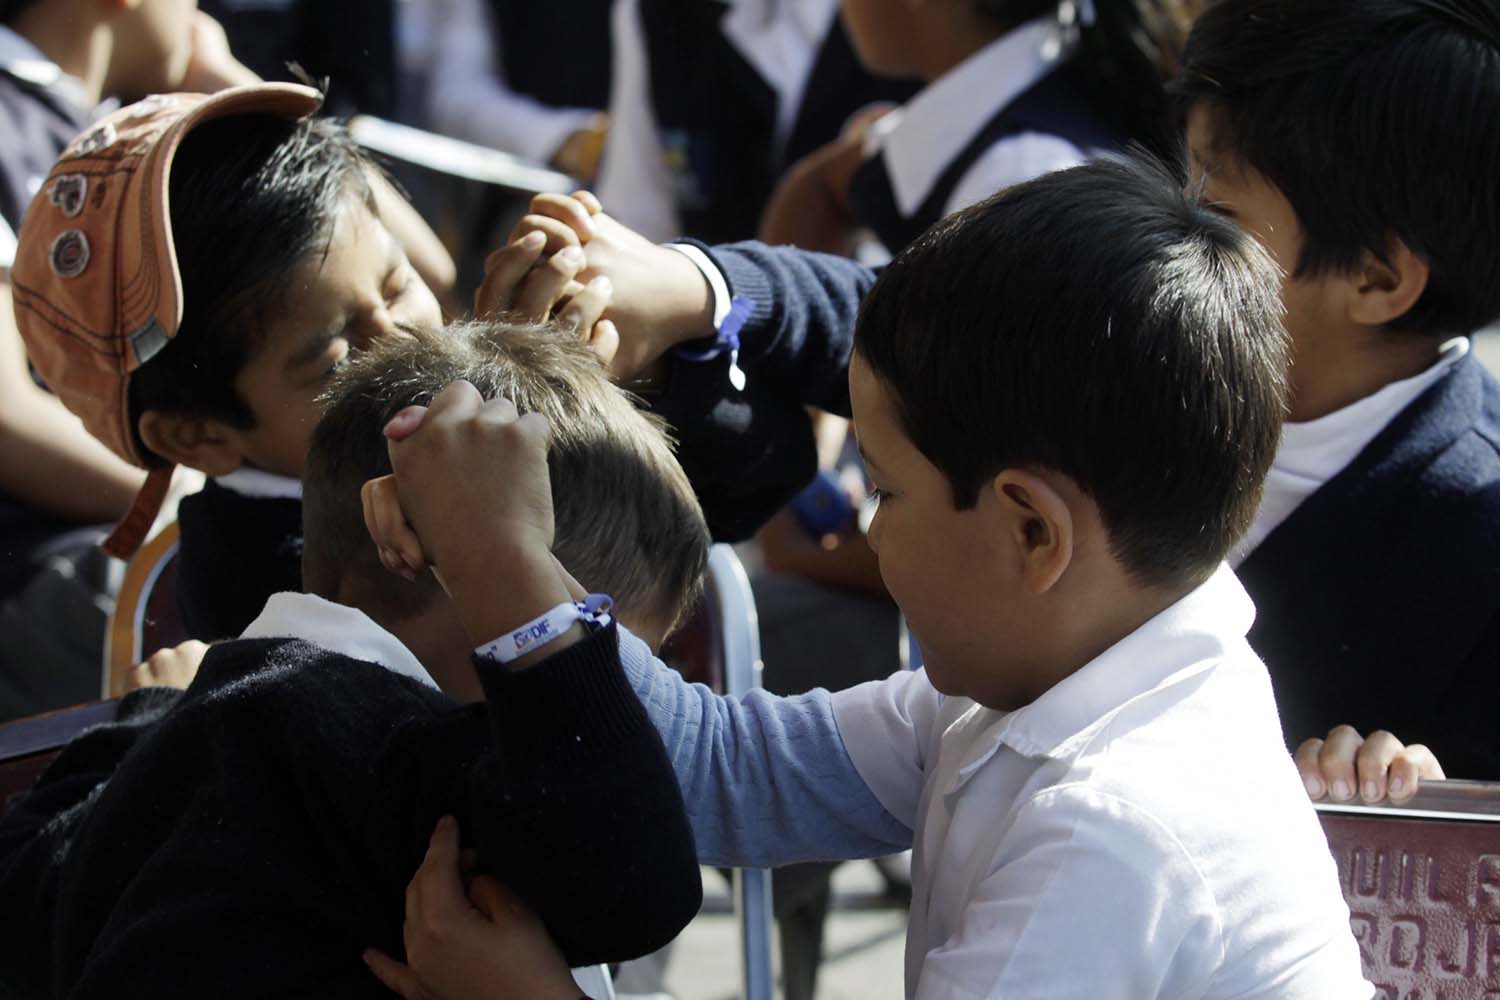 Sufre bulliyng 70% de niños; México, líder en casos de violencia escolar